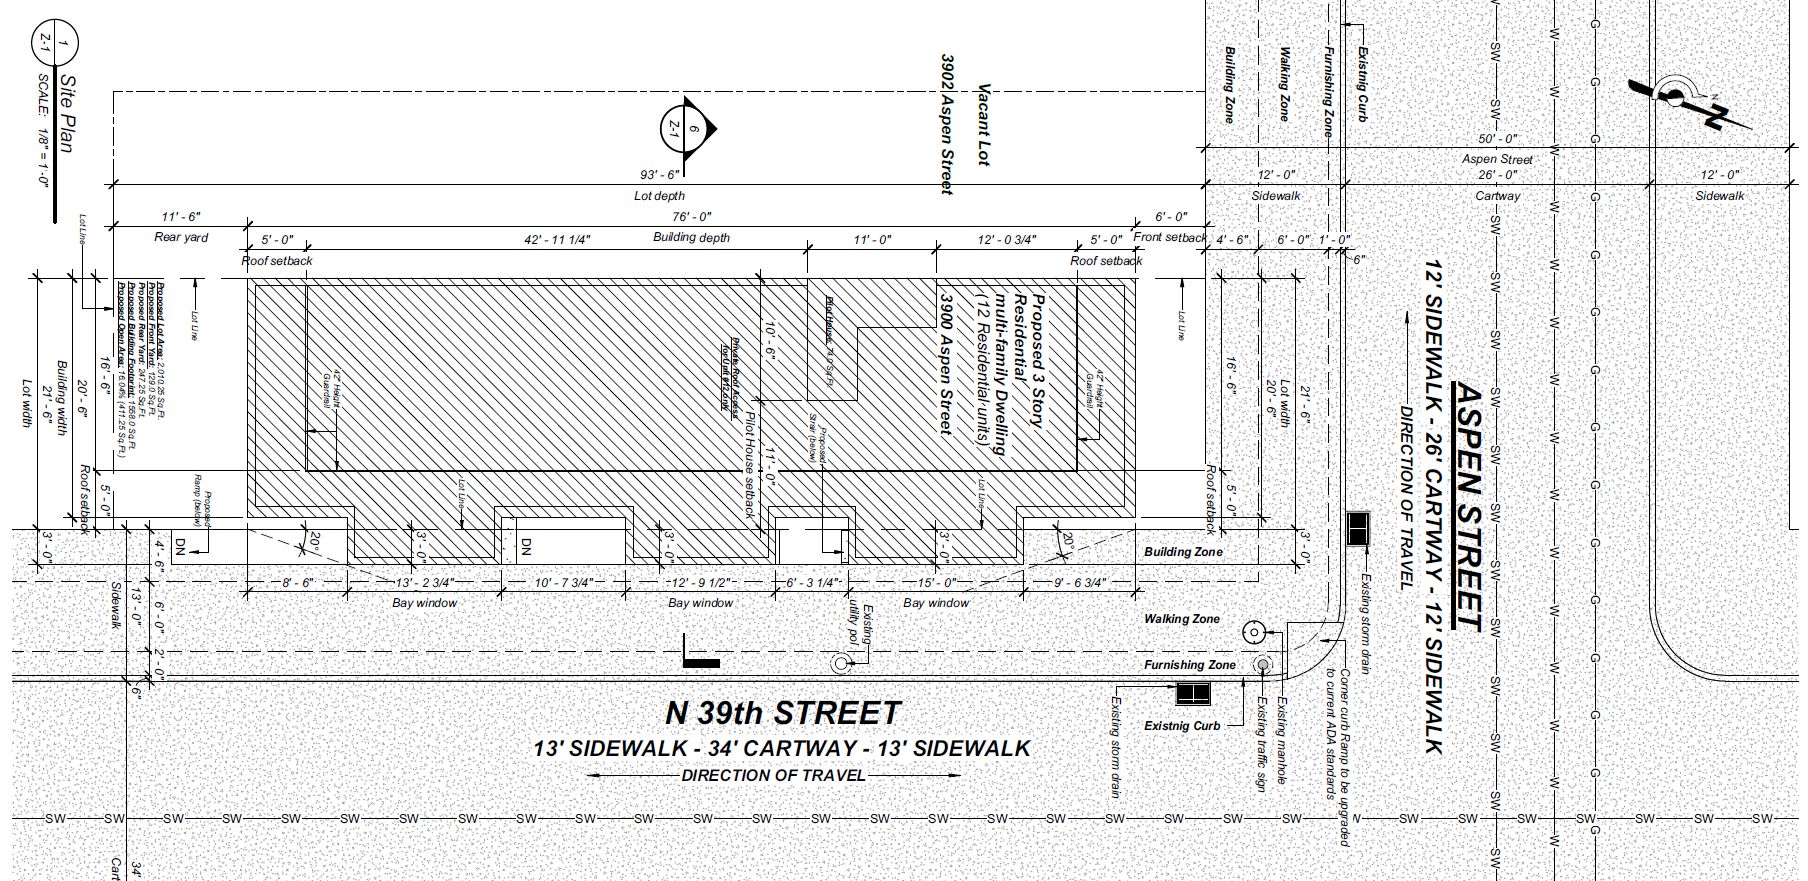 3900 Aspen Street. Site plan. Credit: Haverford Square Designs via the City of Philadelphia